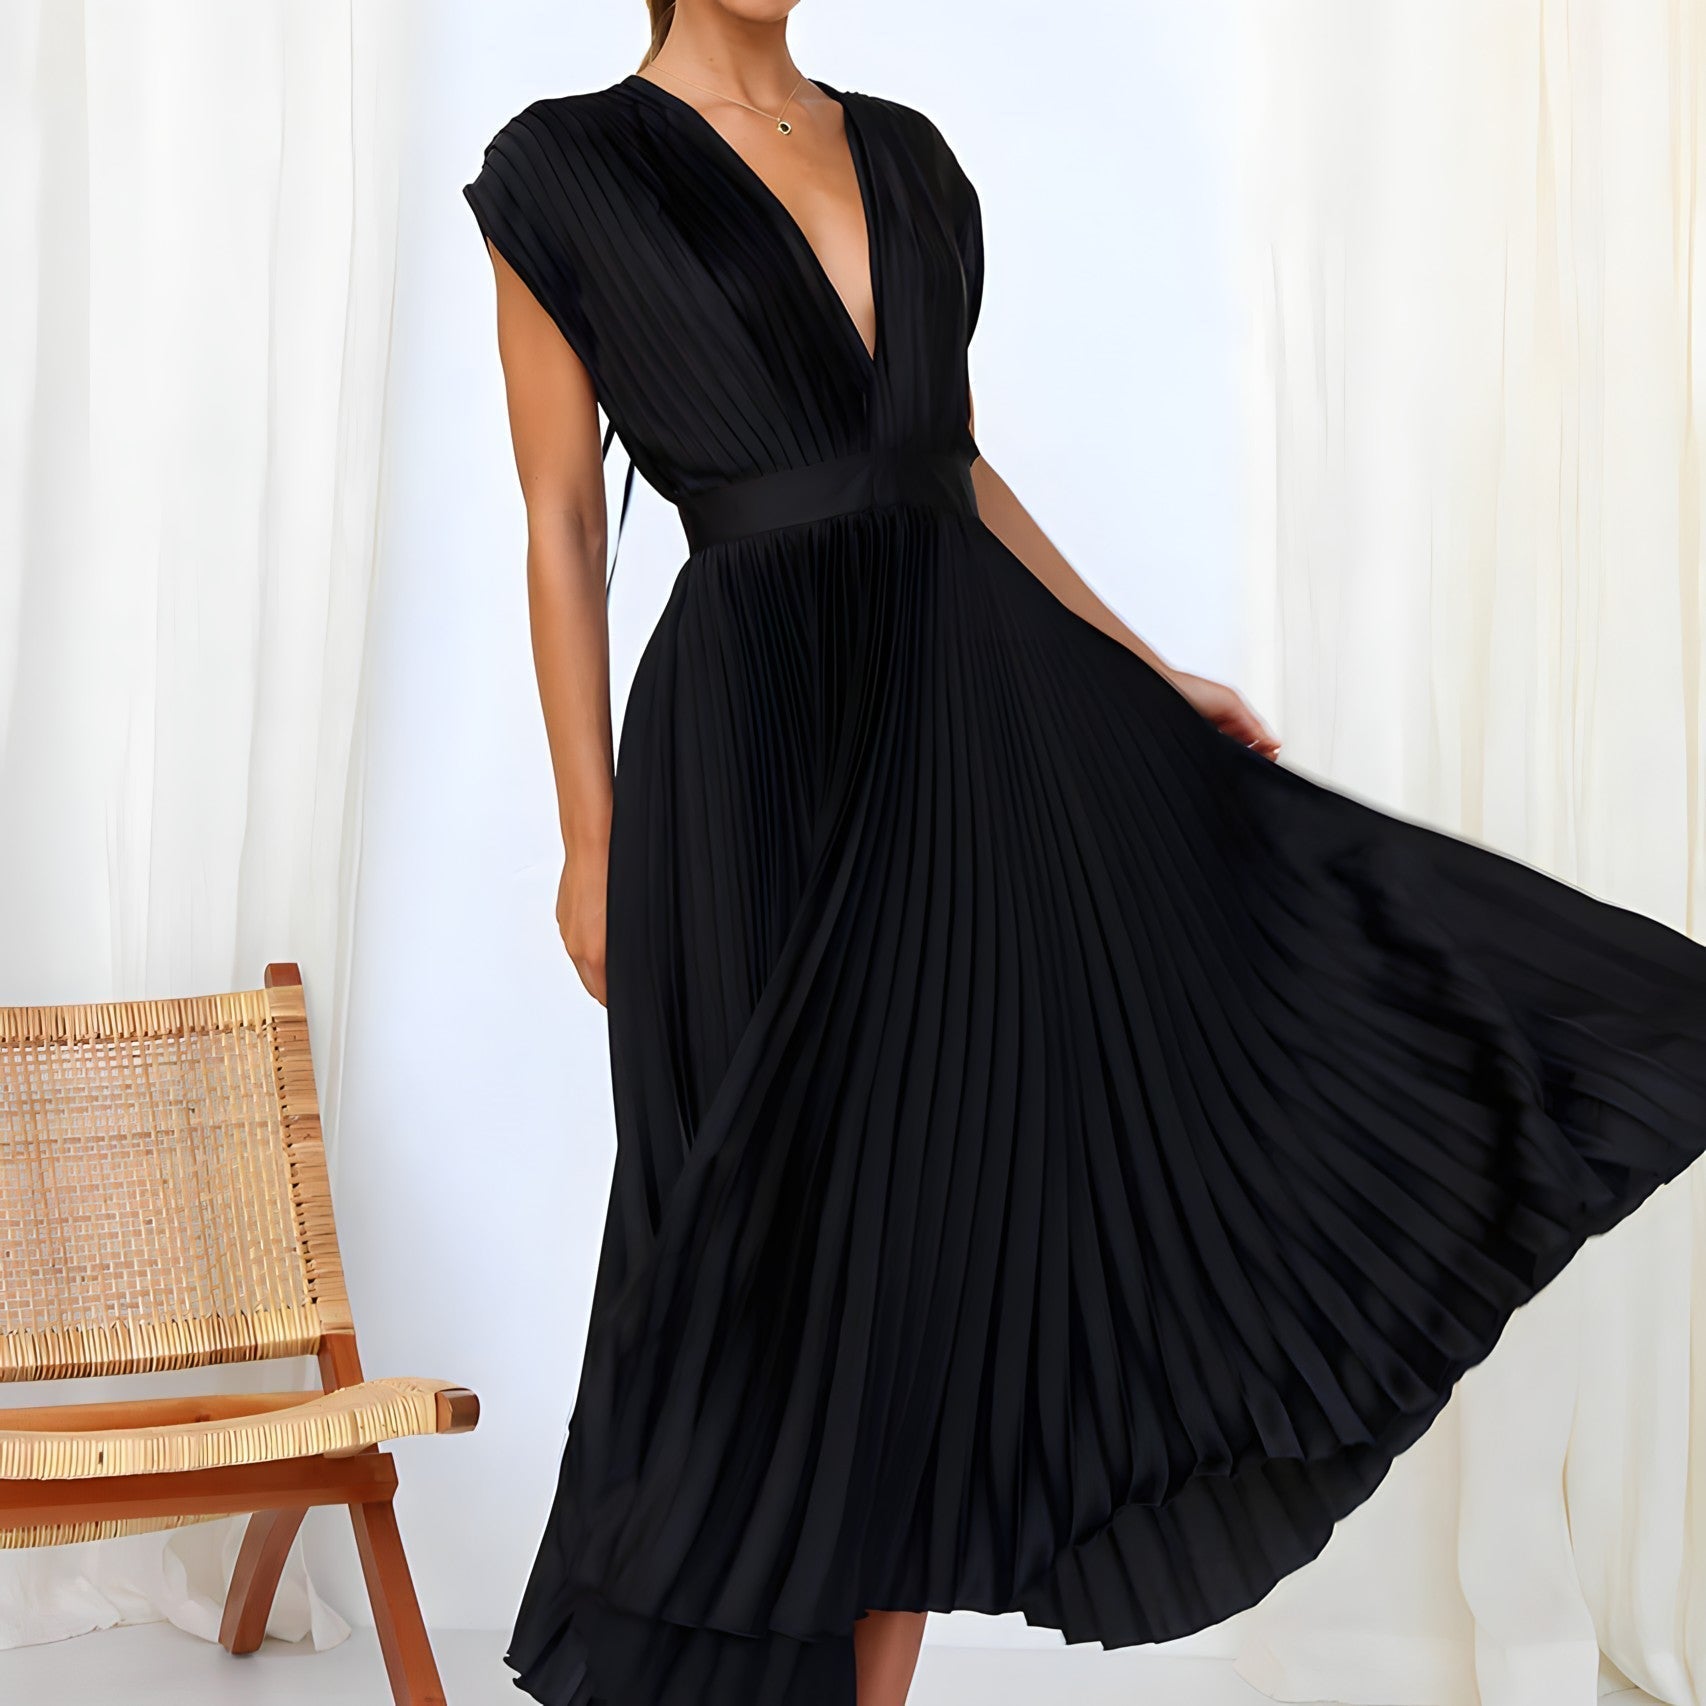 Elegant dress